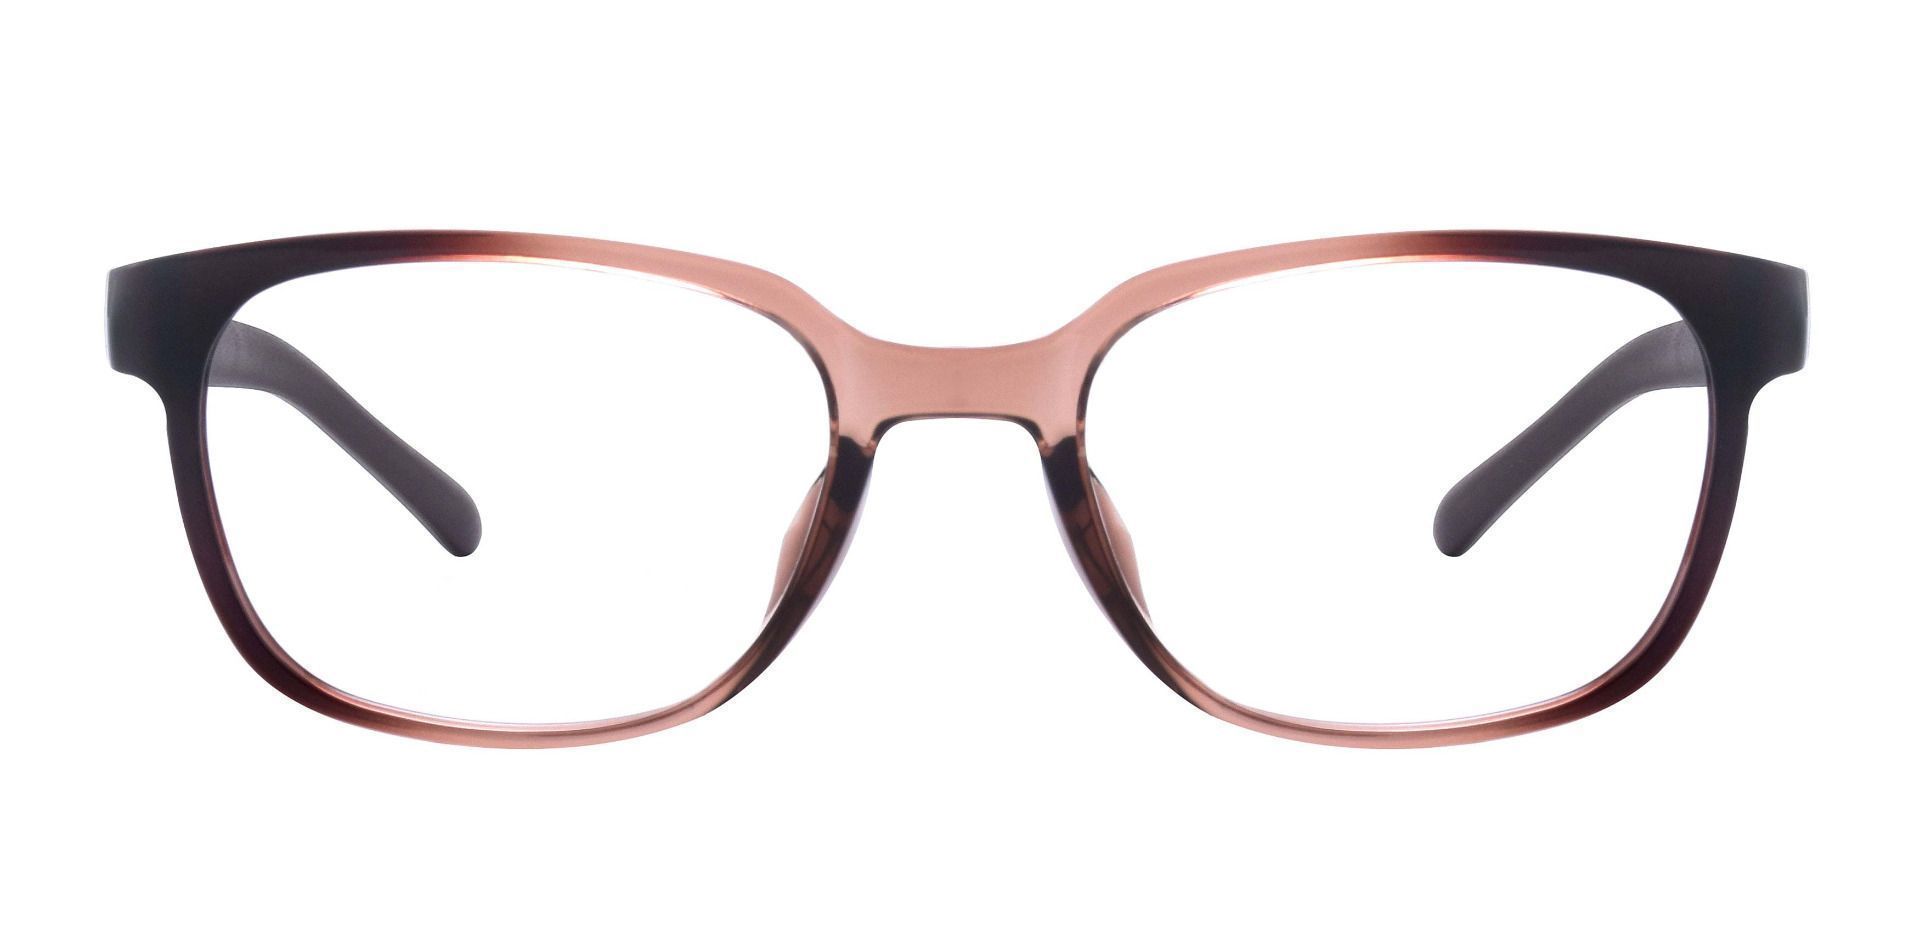 Darwin Classic Square Lined Bifocal Glasses - Brown